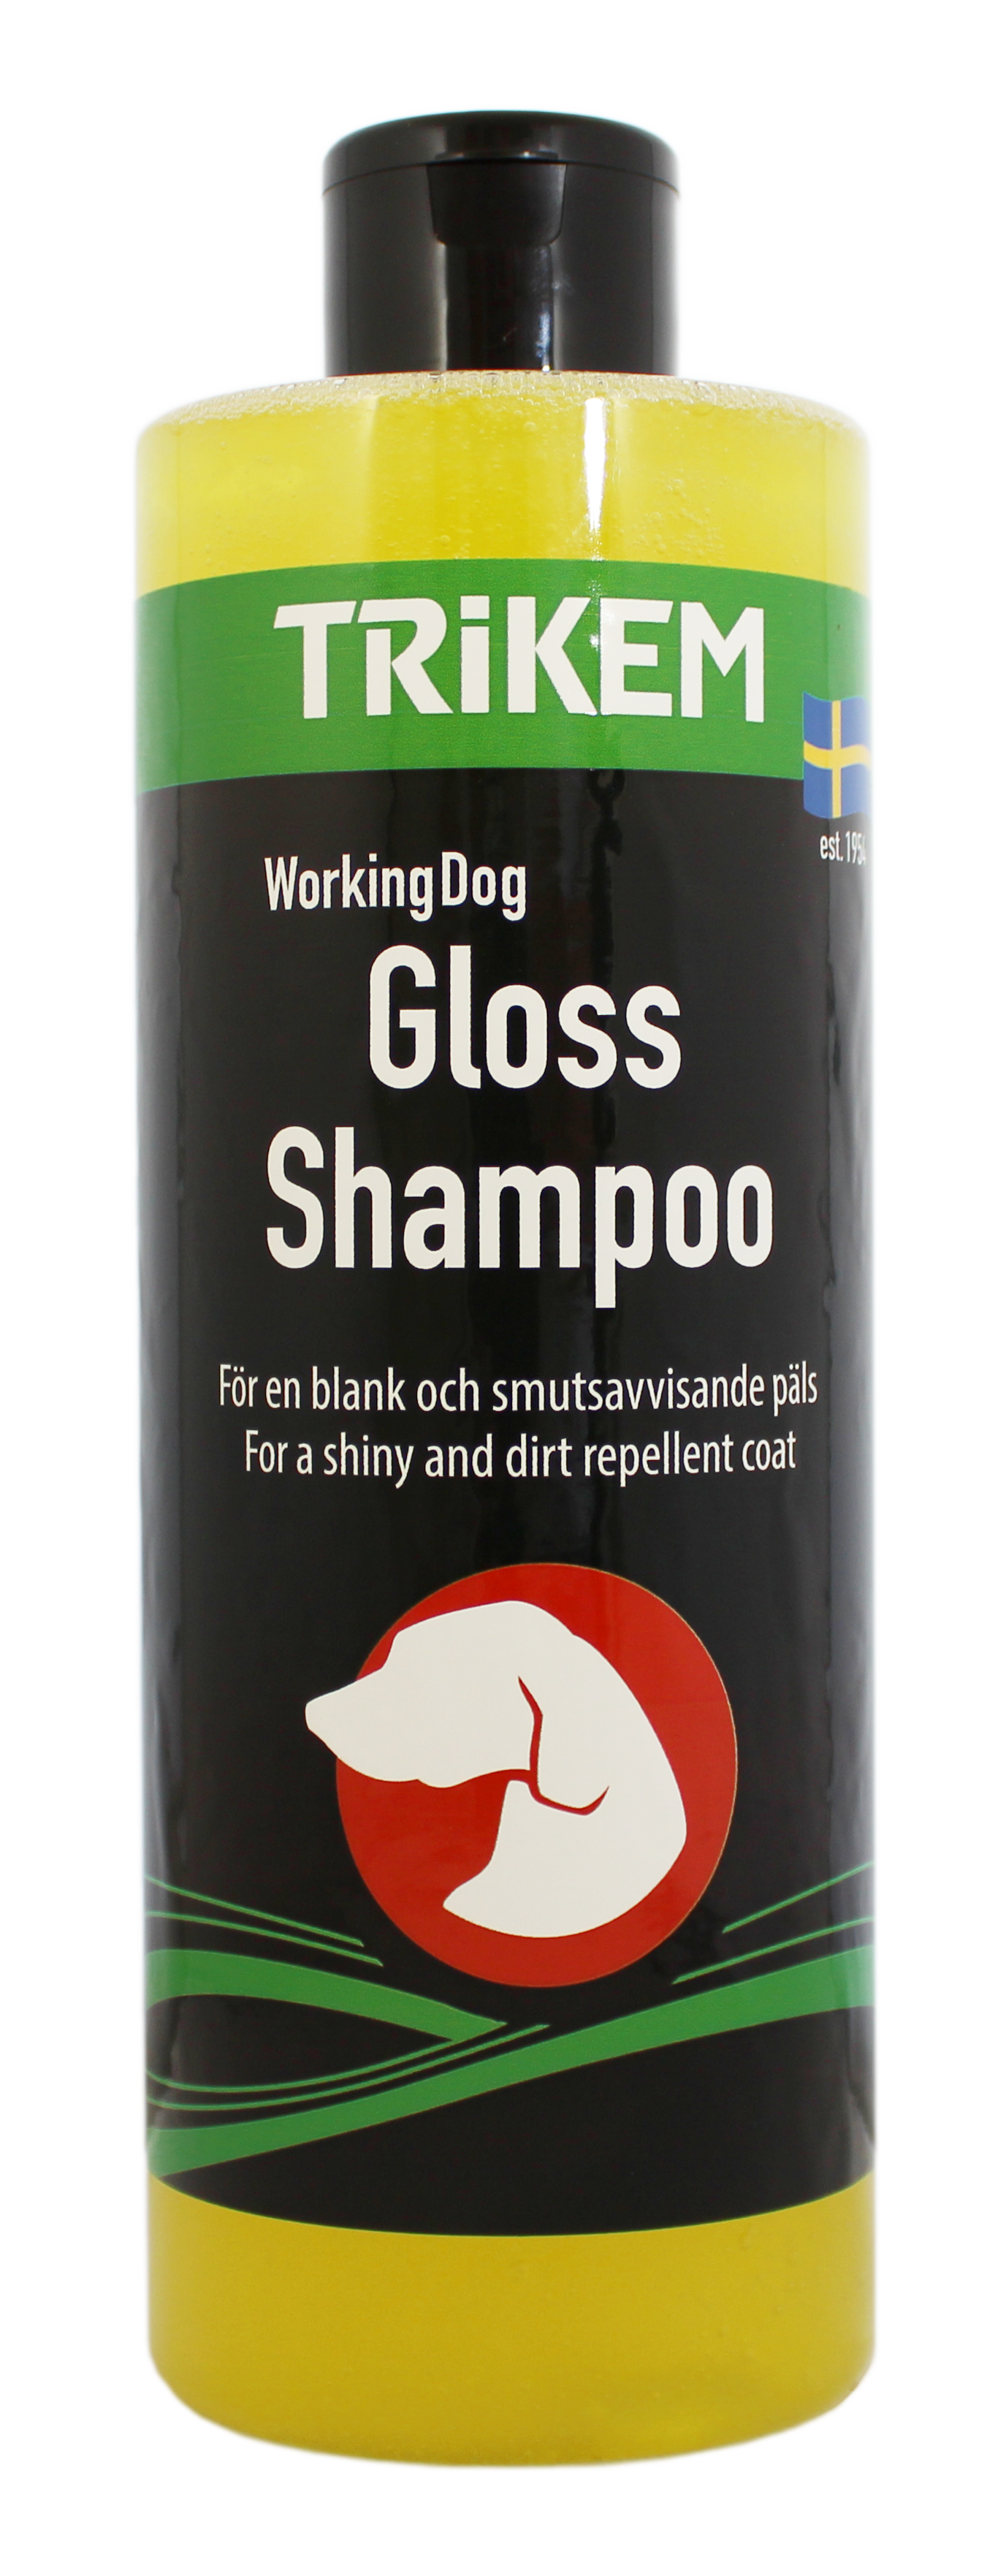 TRiKEM Working Dog Gloss Shampoo 500ml